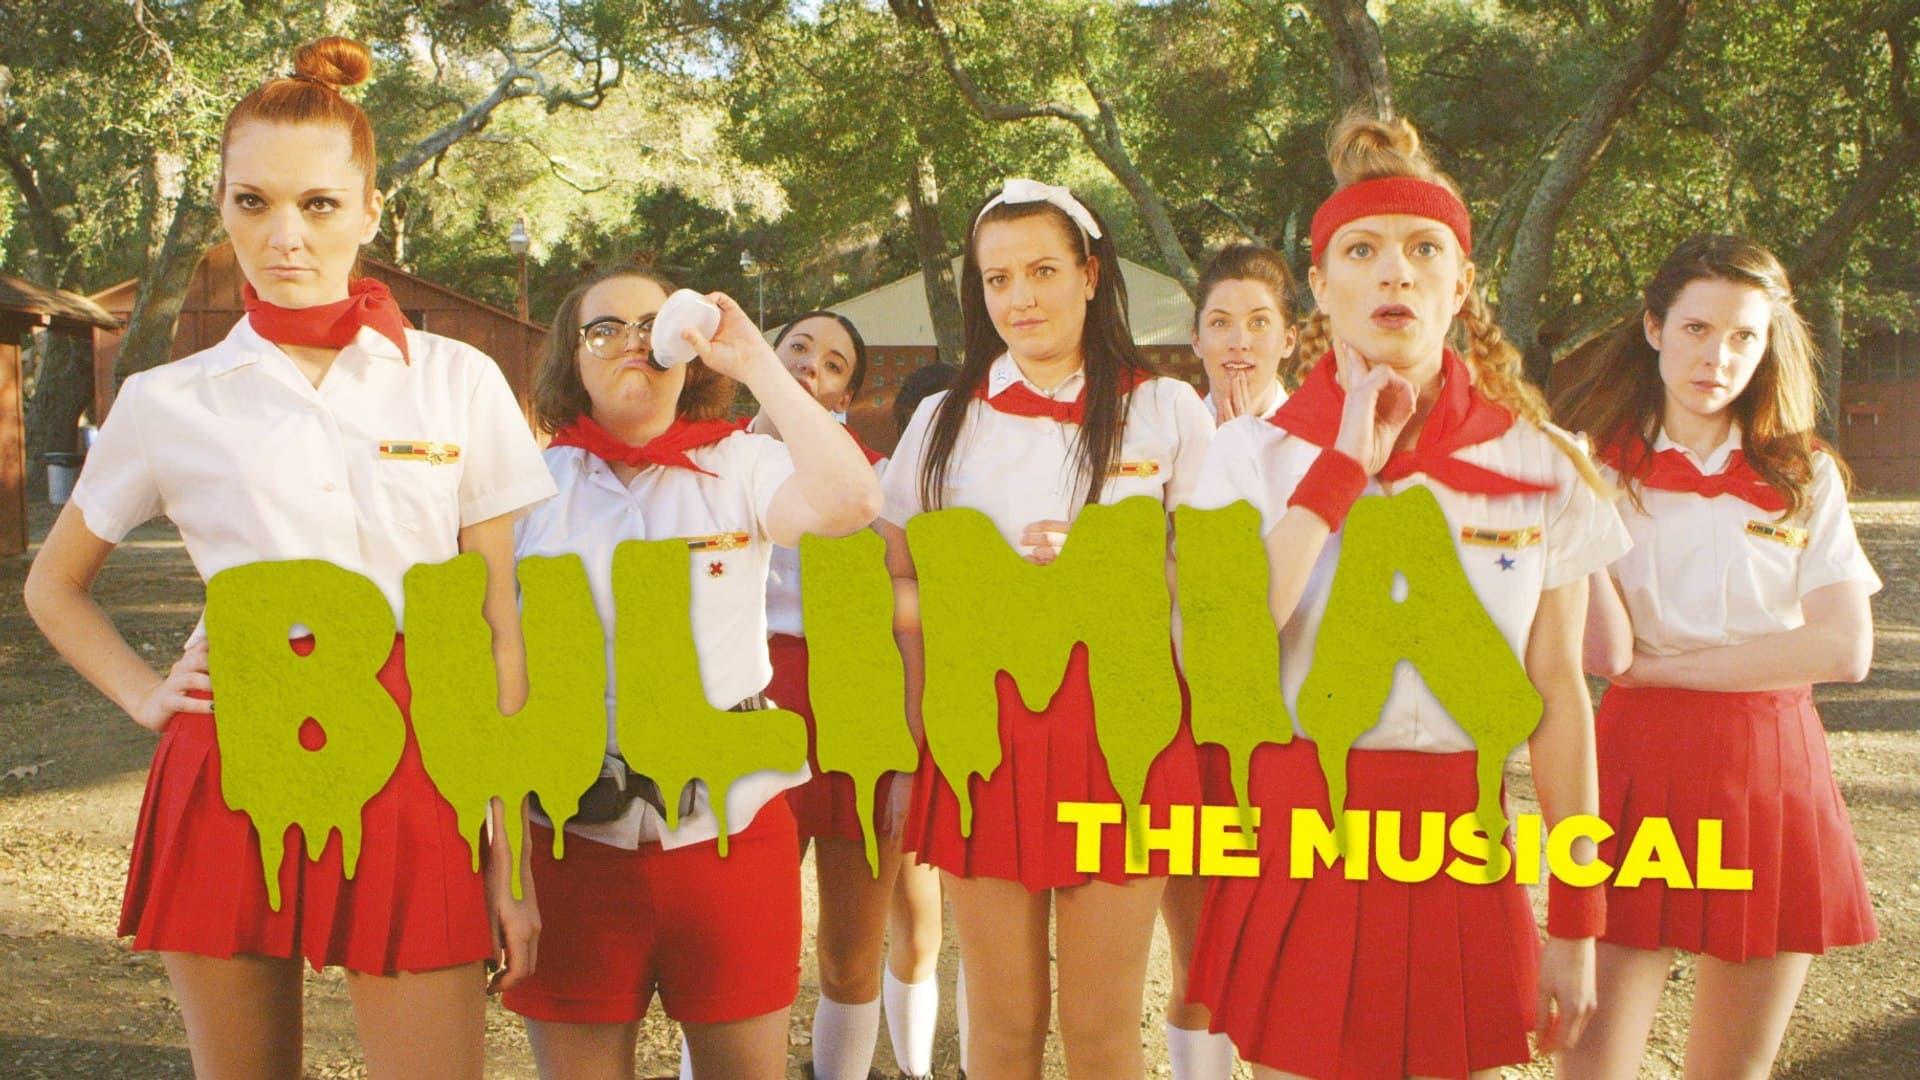 Bulimia: The Musical backdrop